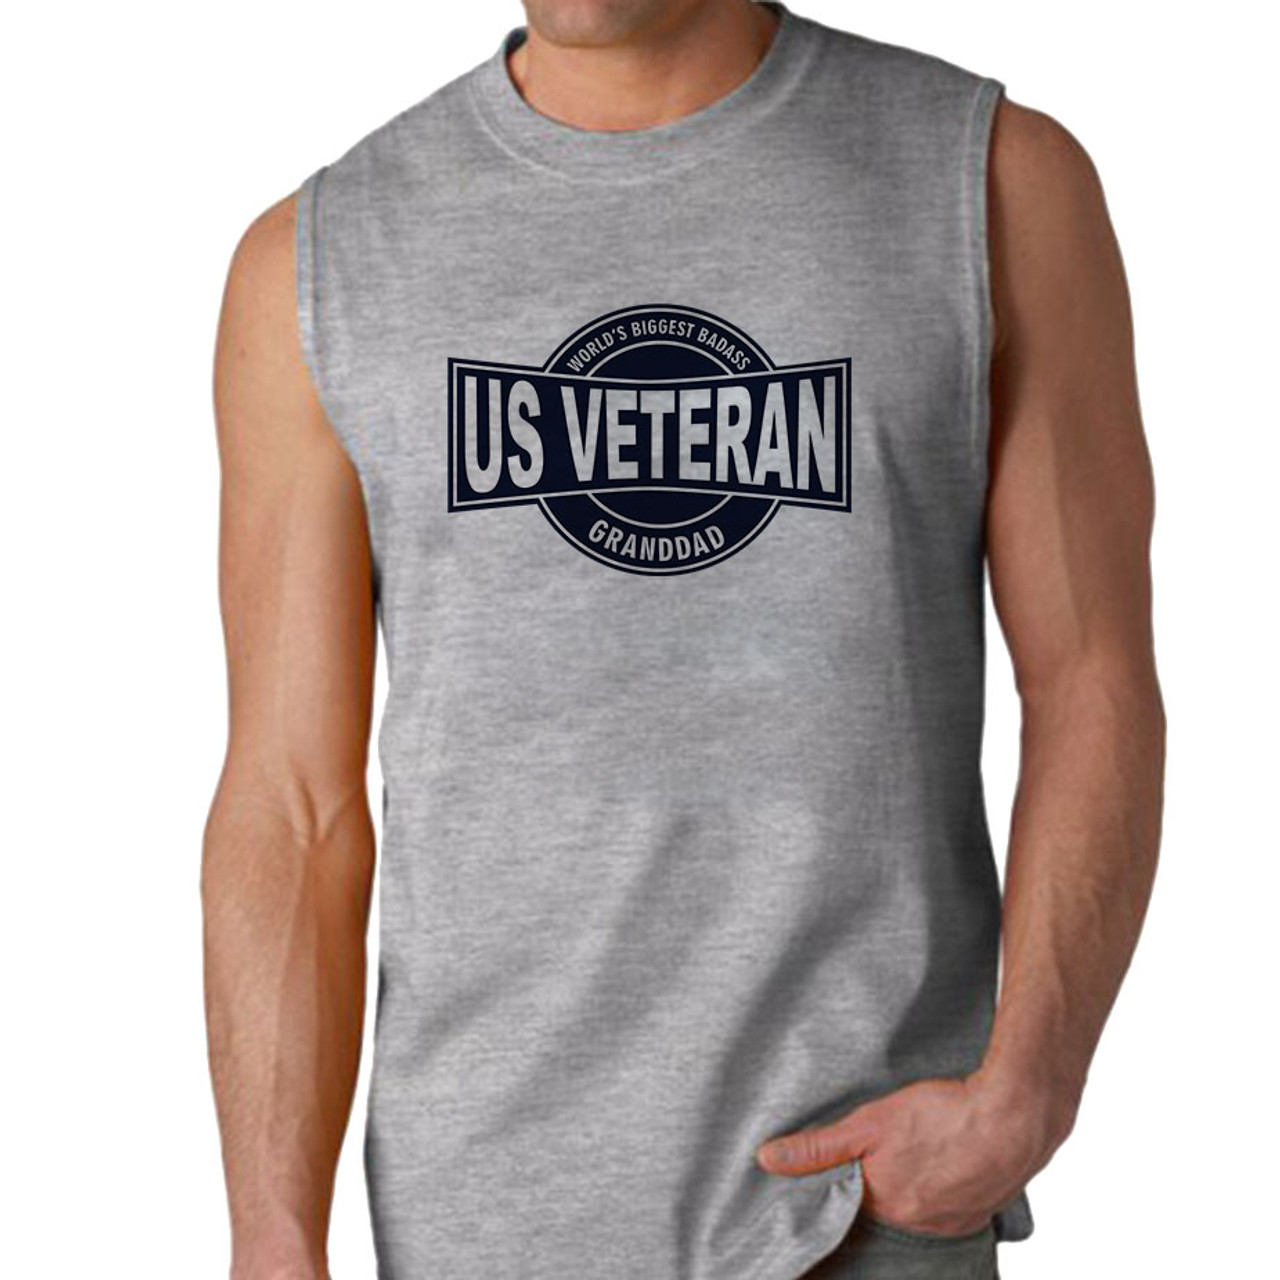 World's Biggest Badass US Veteran Granddad Sleeveless Shirt